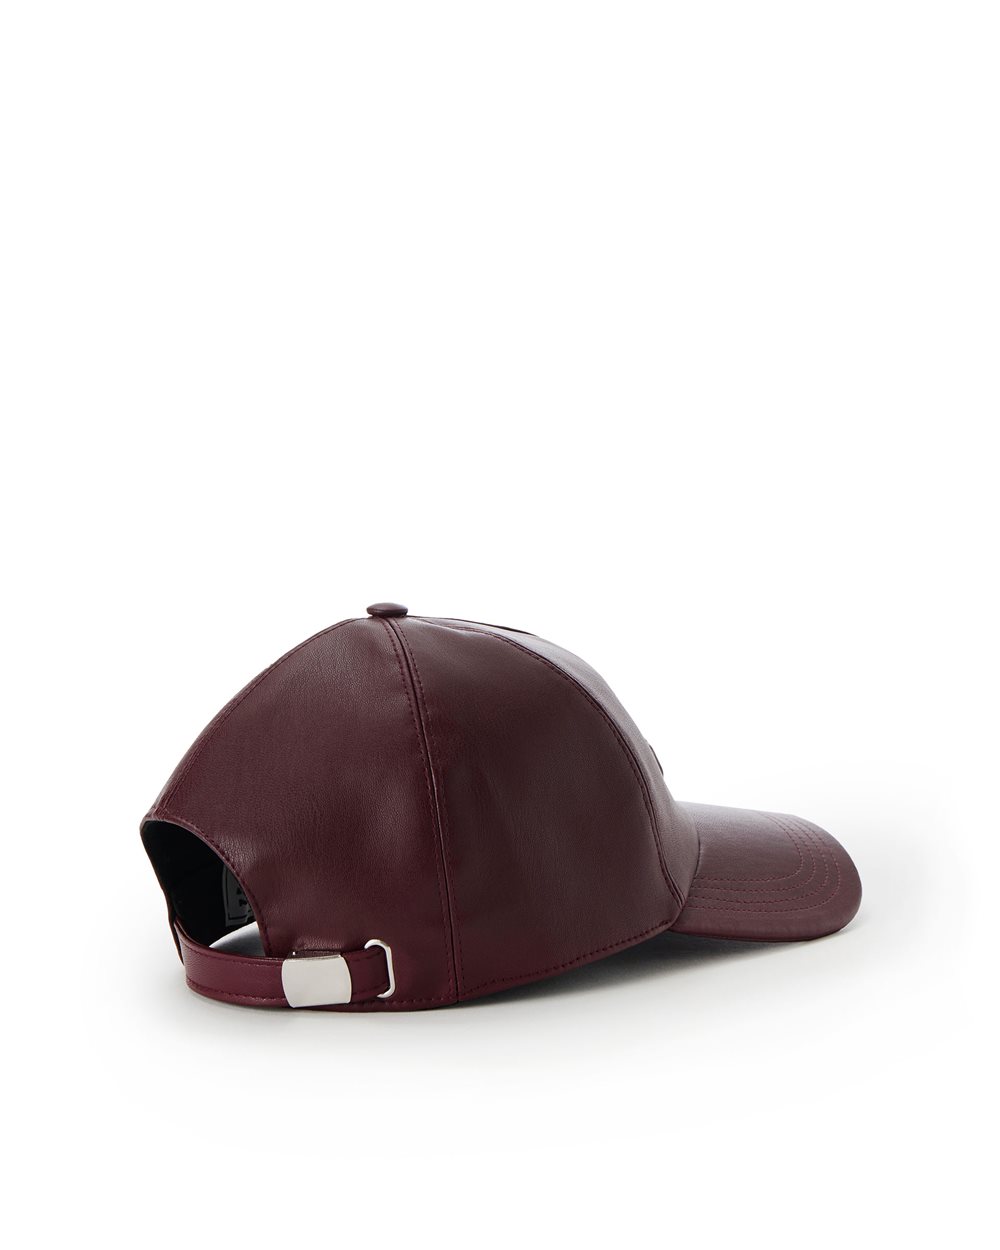 Baseball cap with logo - Iceberg - Official Website